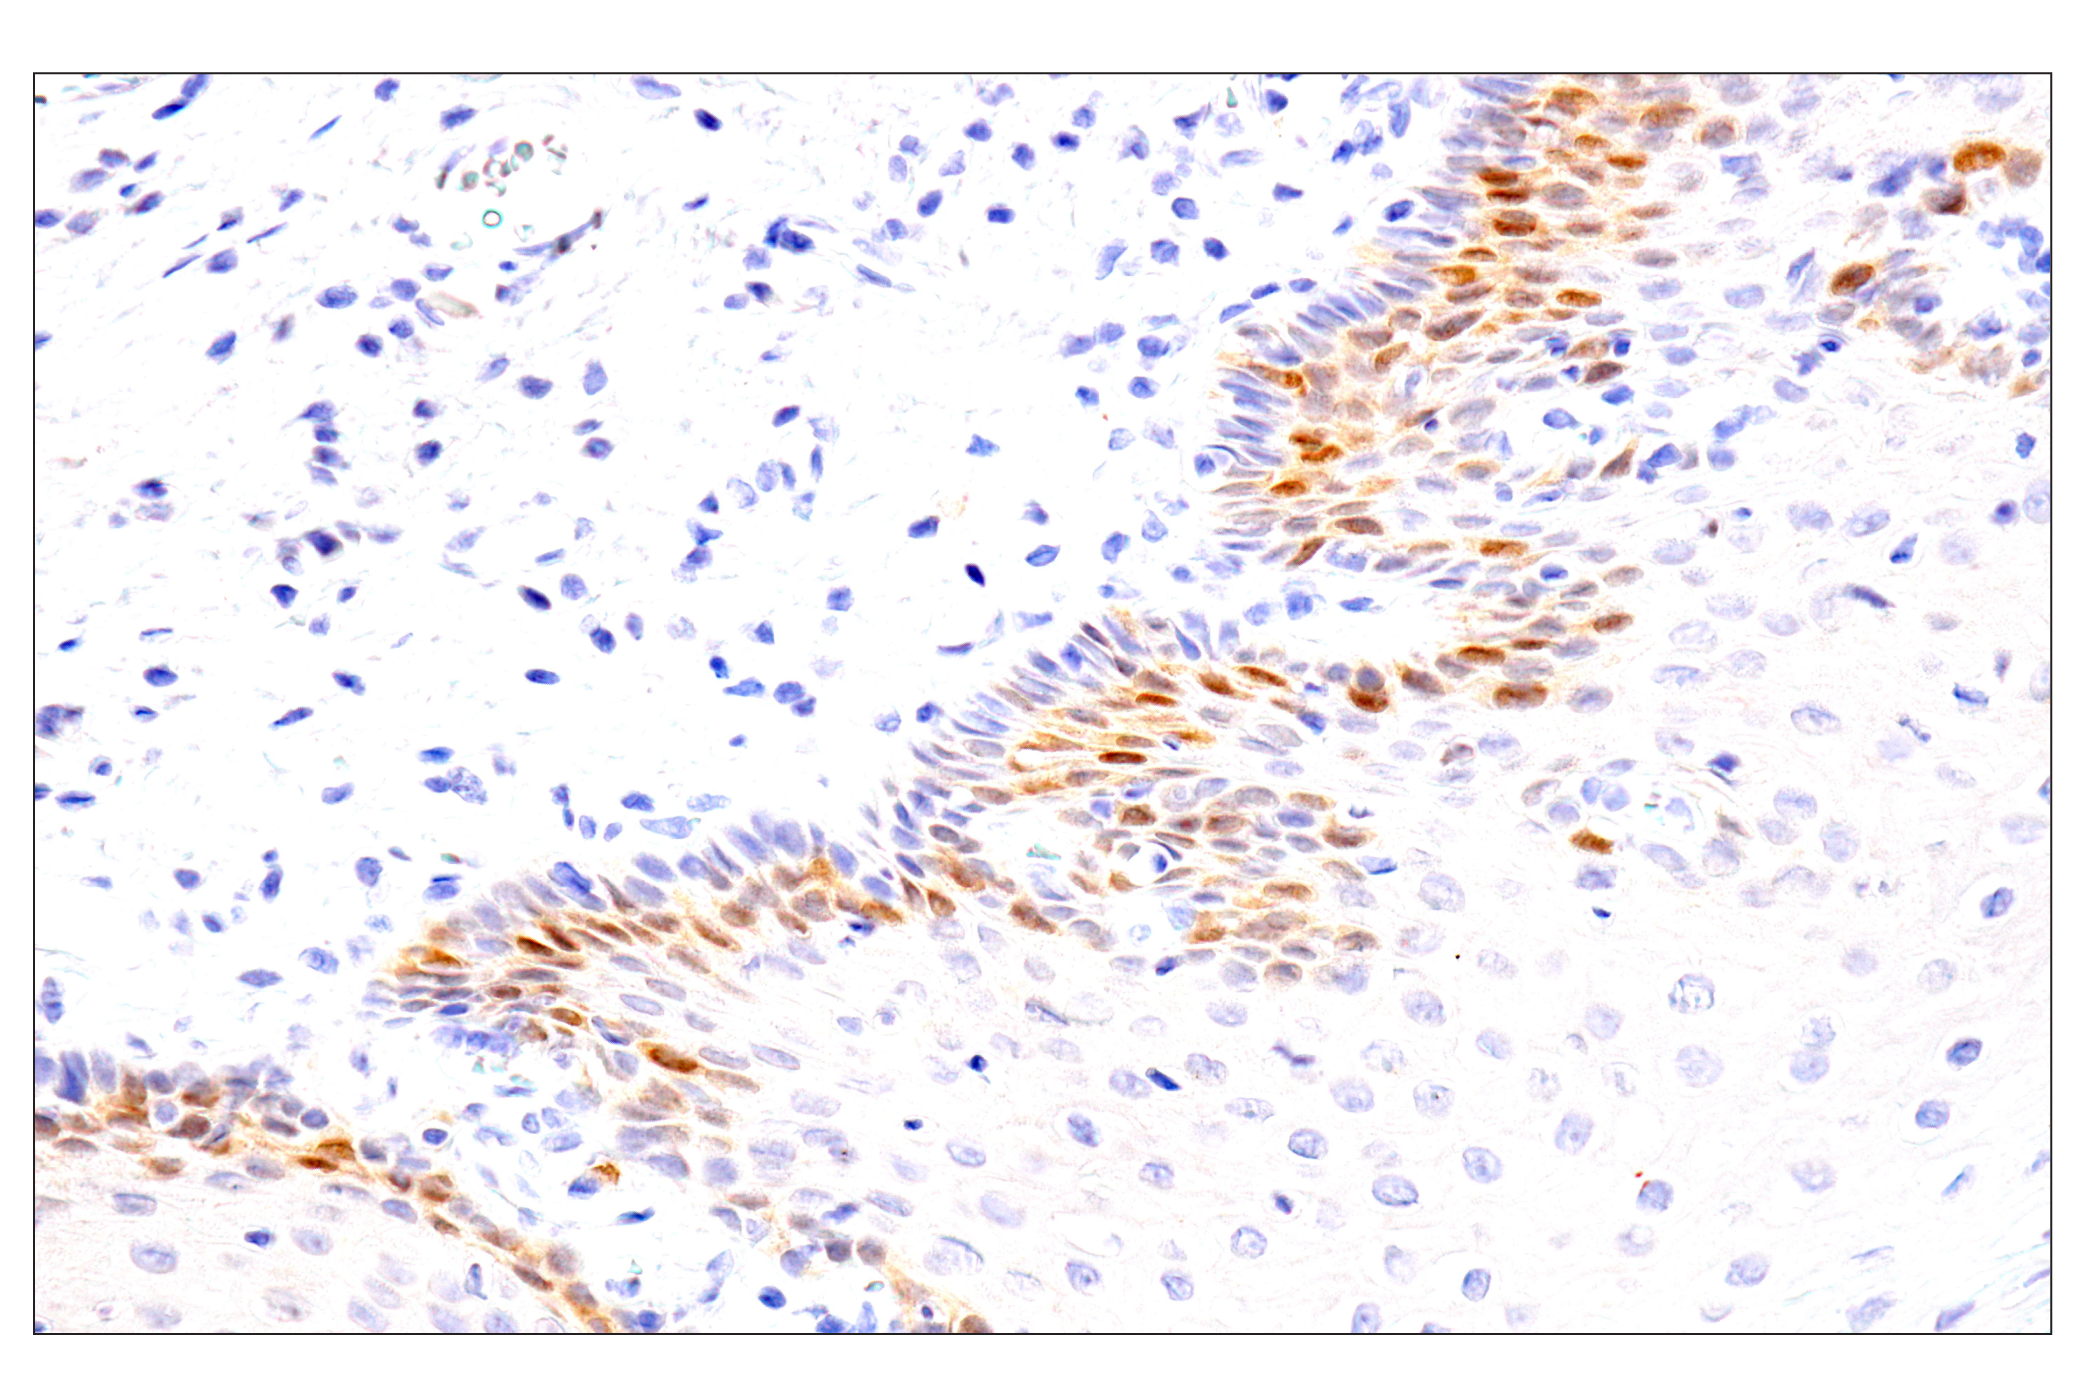  Image 18: PhosphoPlus® Chk1 (Ser317) Antibody Duet